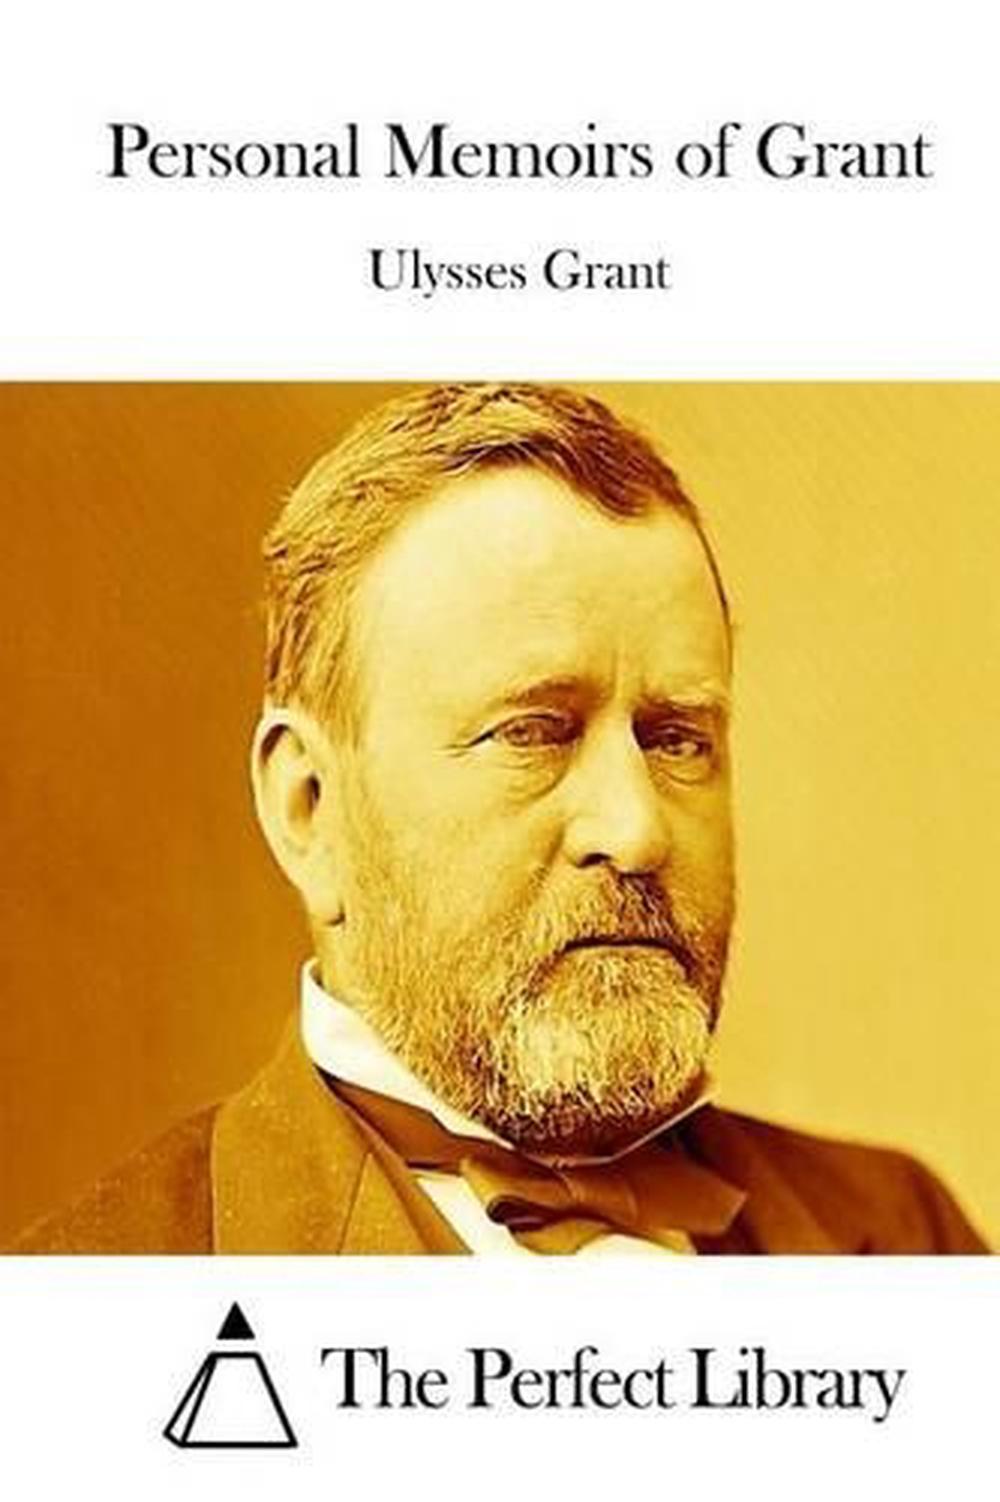 Personal Memoirs of U.S. Grant by E.B. Long